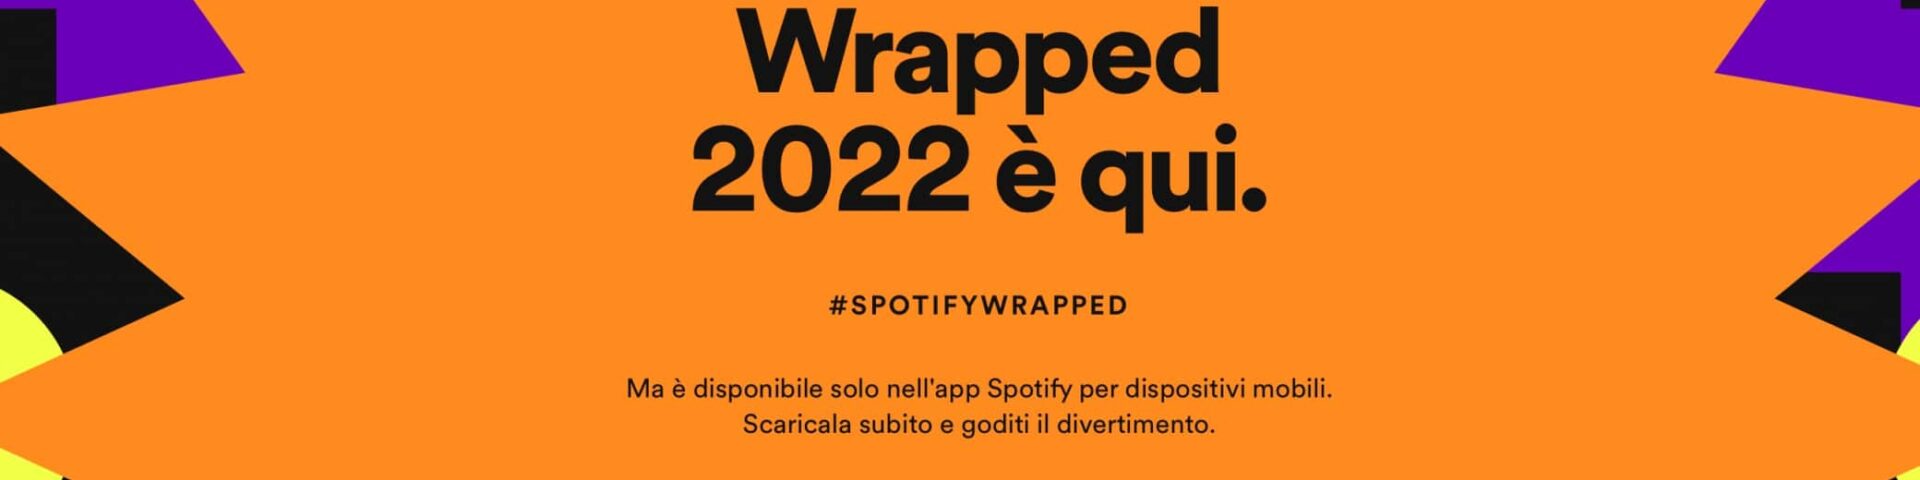 Come si usa Spotify Wrapped 2022 dal computer?